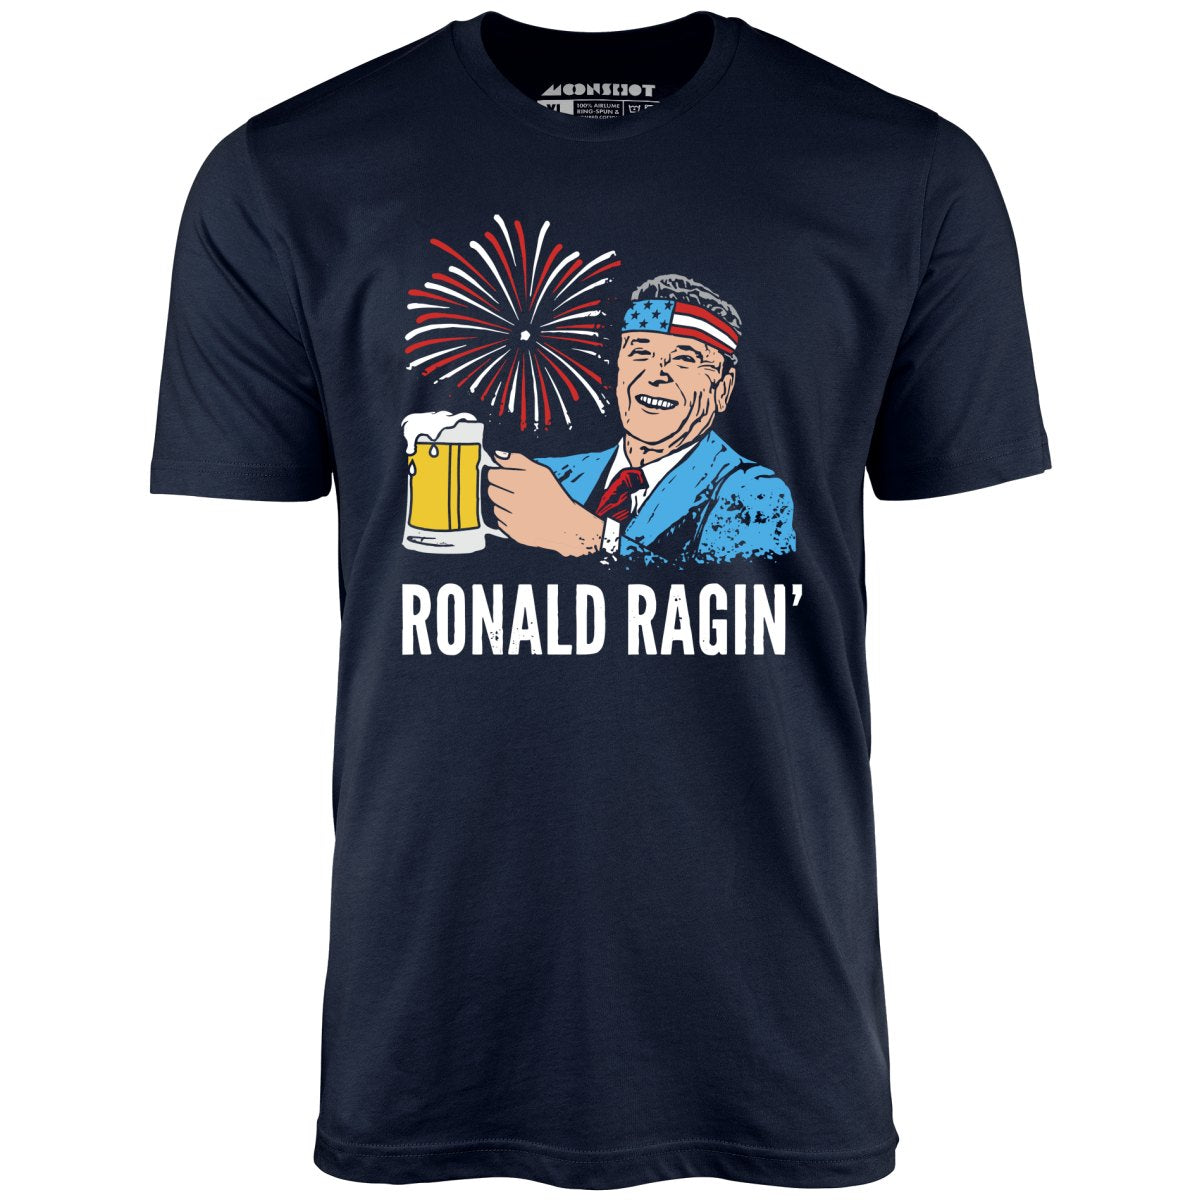 Ronald Ragin' - Unisex T-Shirt